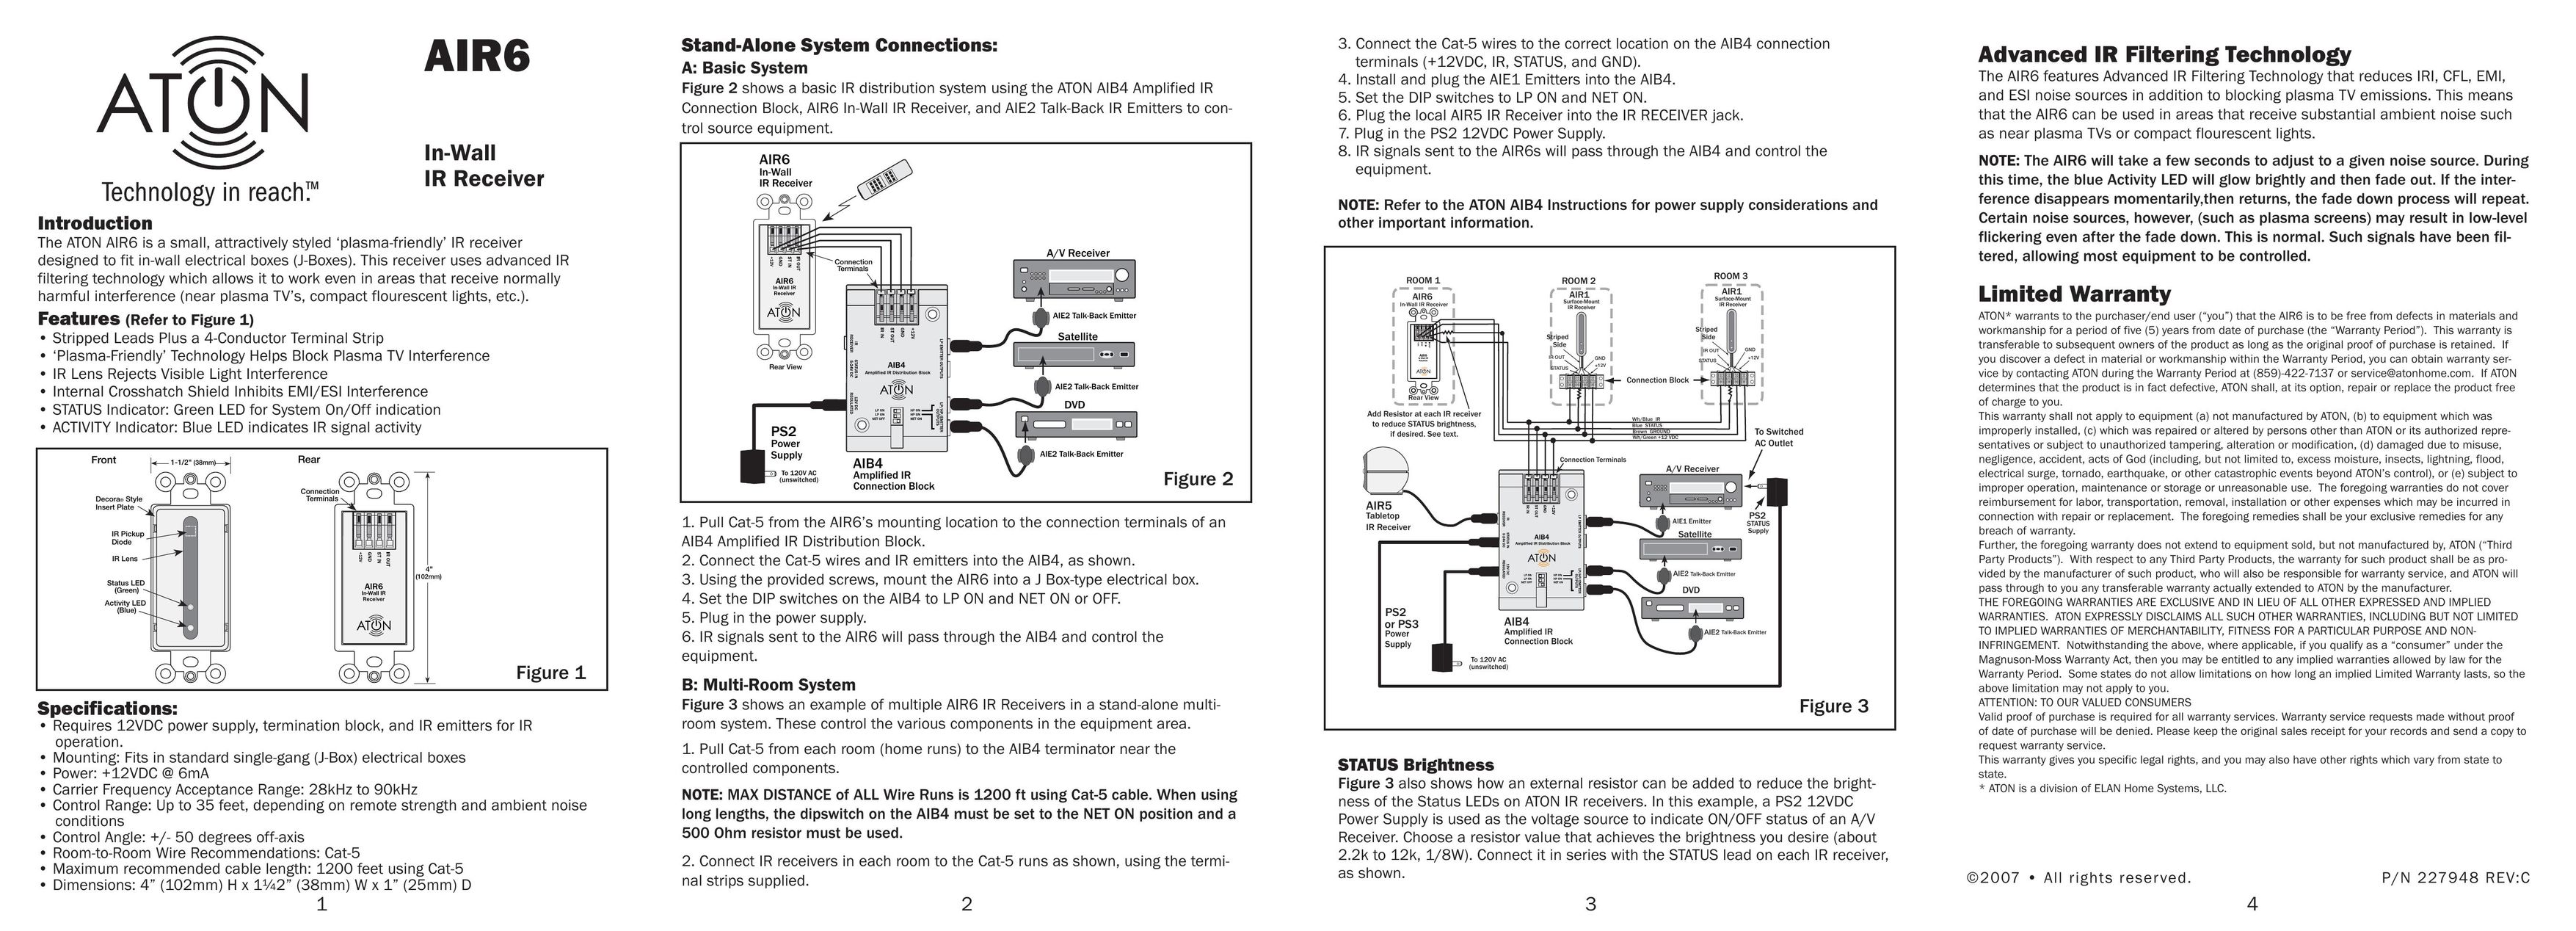 ATON AIR6 Stereo Receiver User Manual